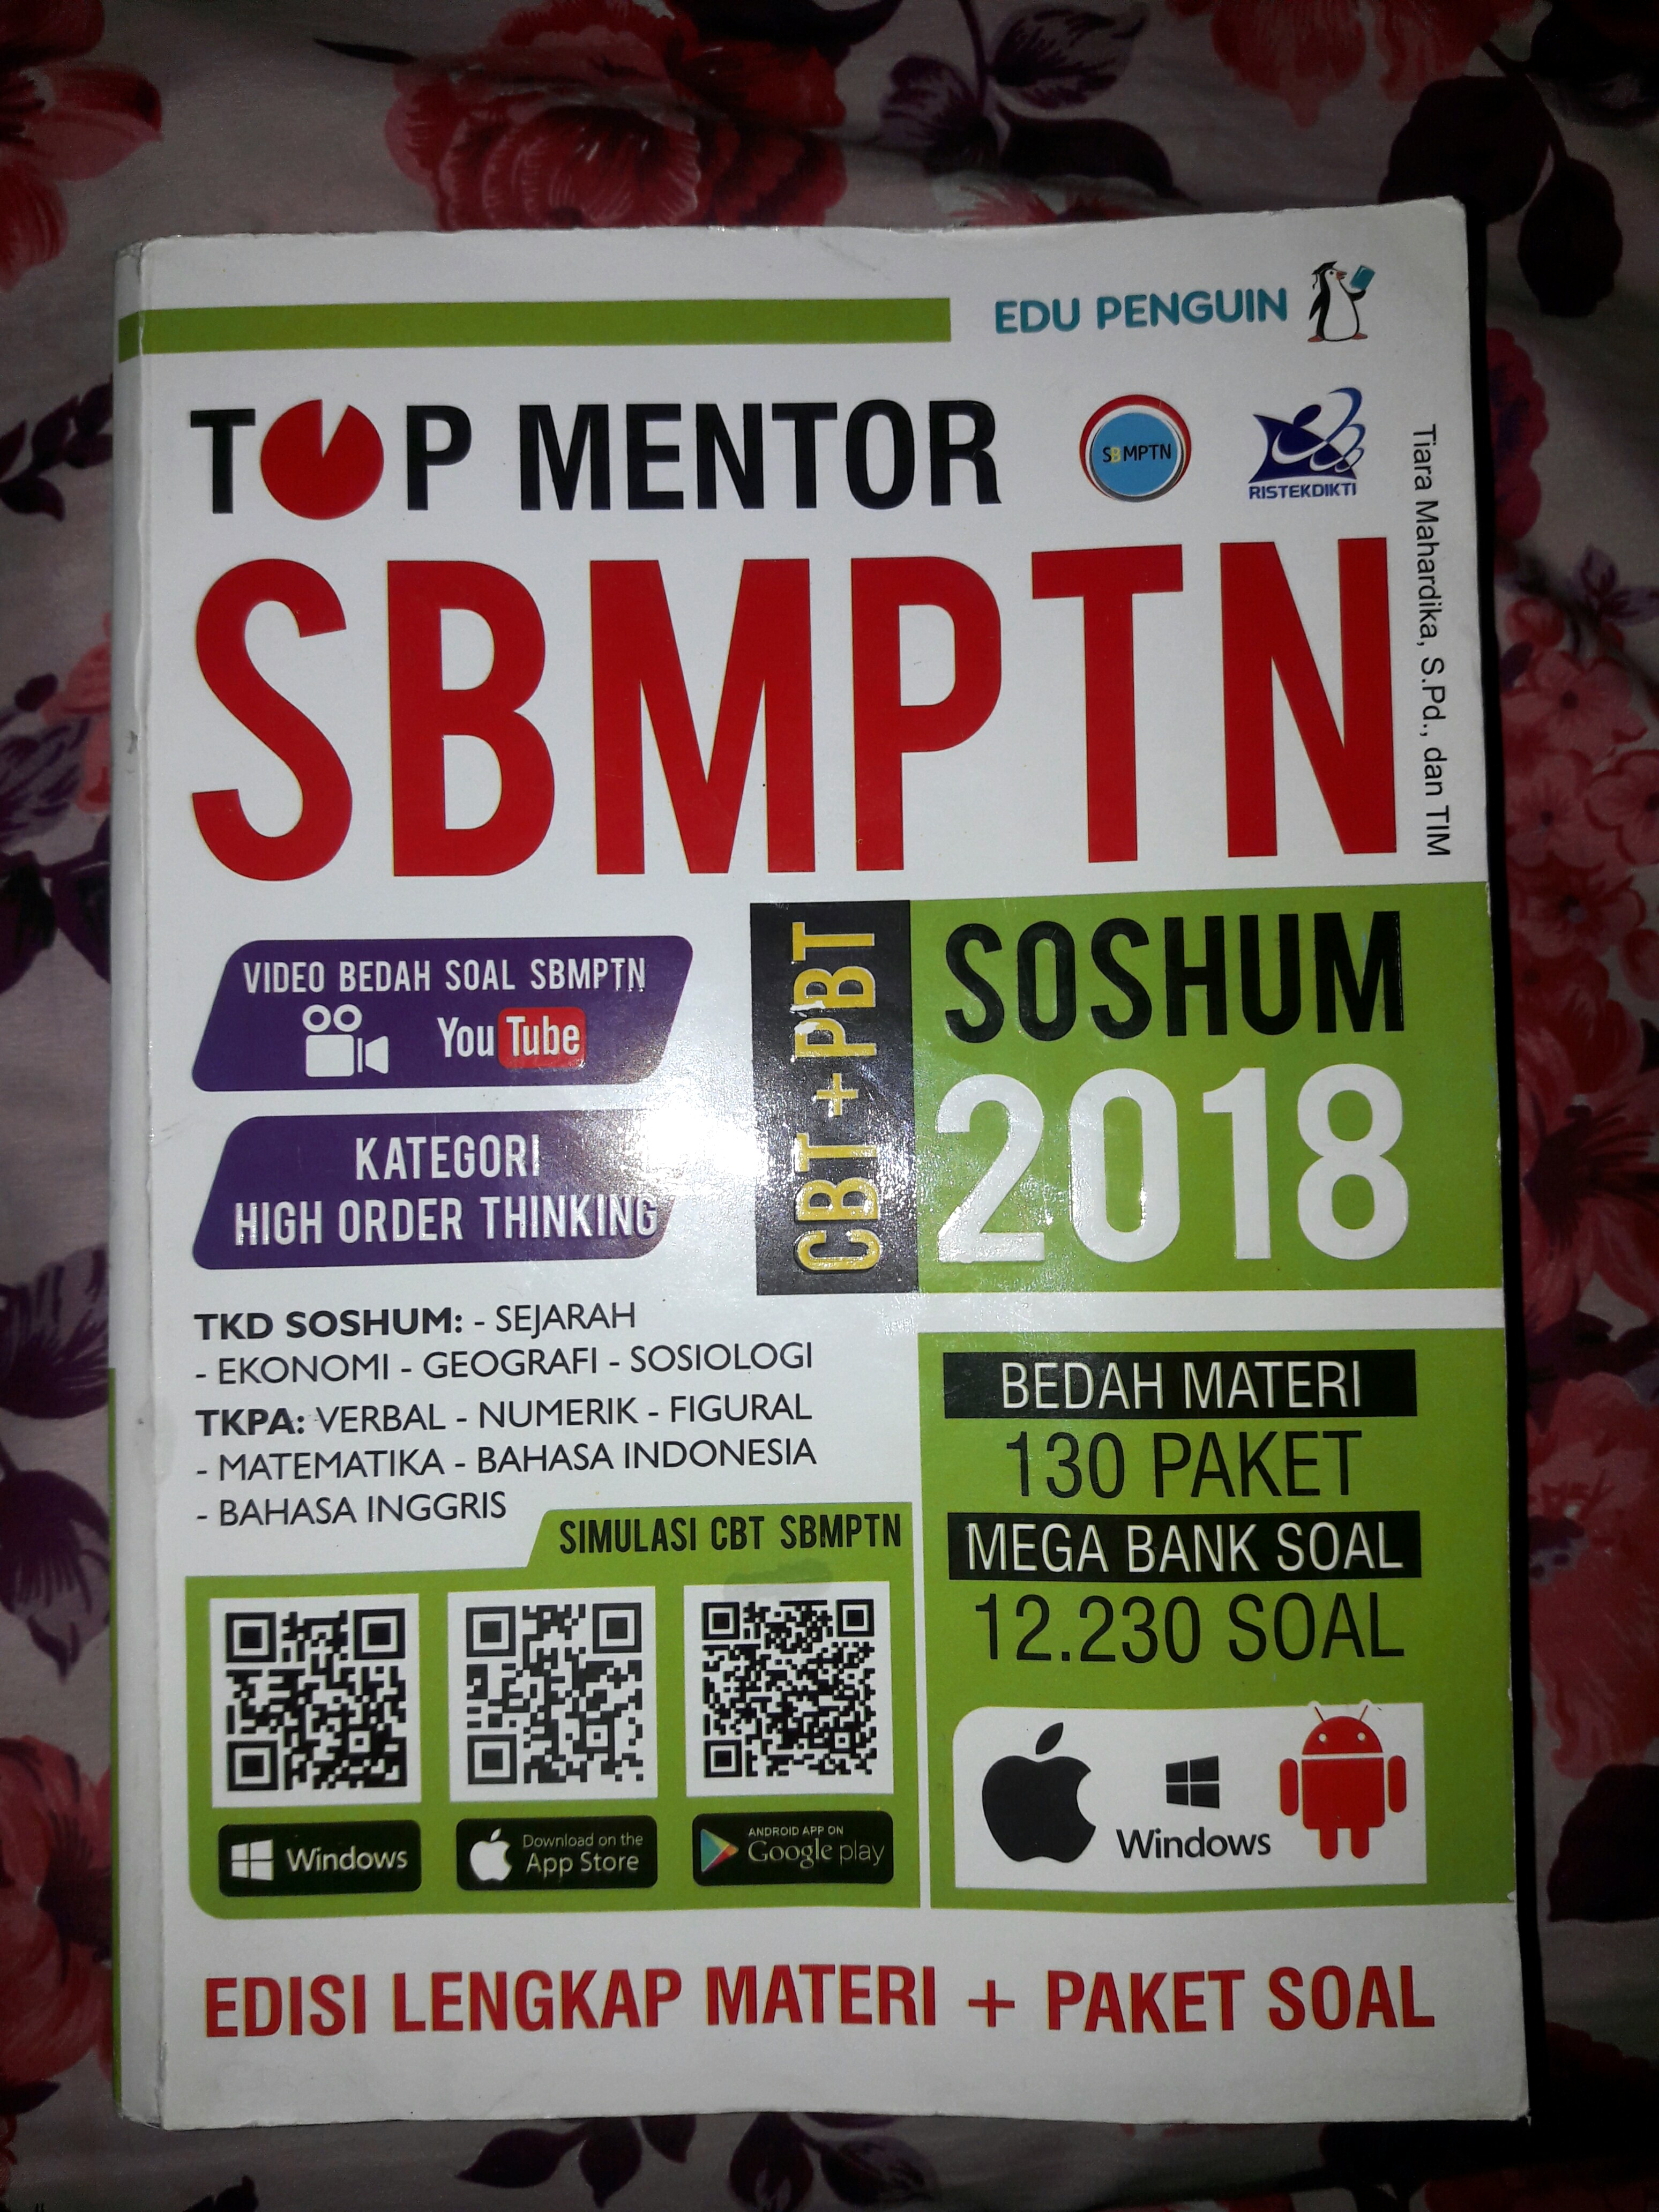 Buku Top Mentor Sbmptn Soshum 2018 Books Stationery Textbooks